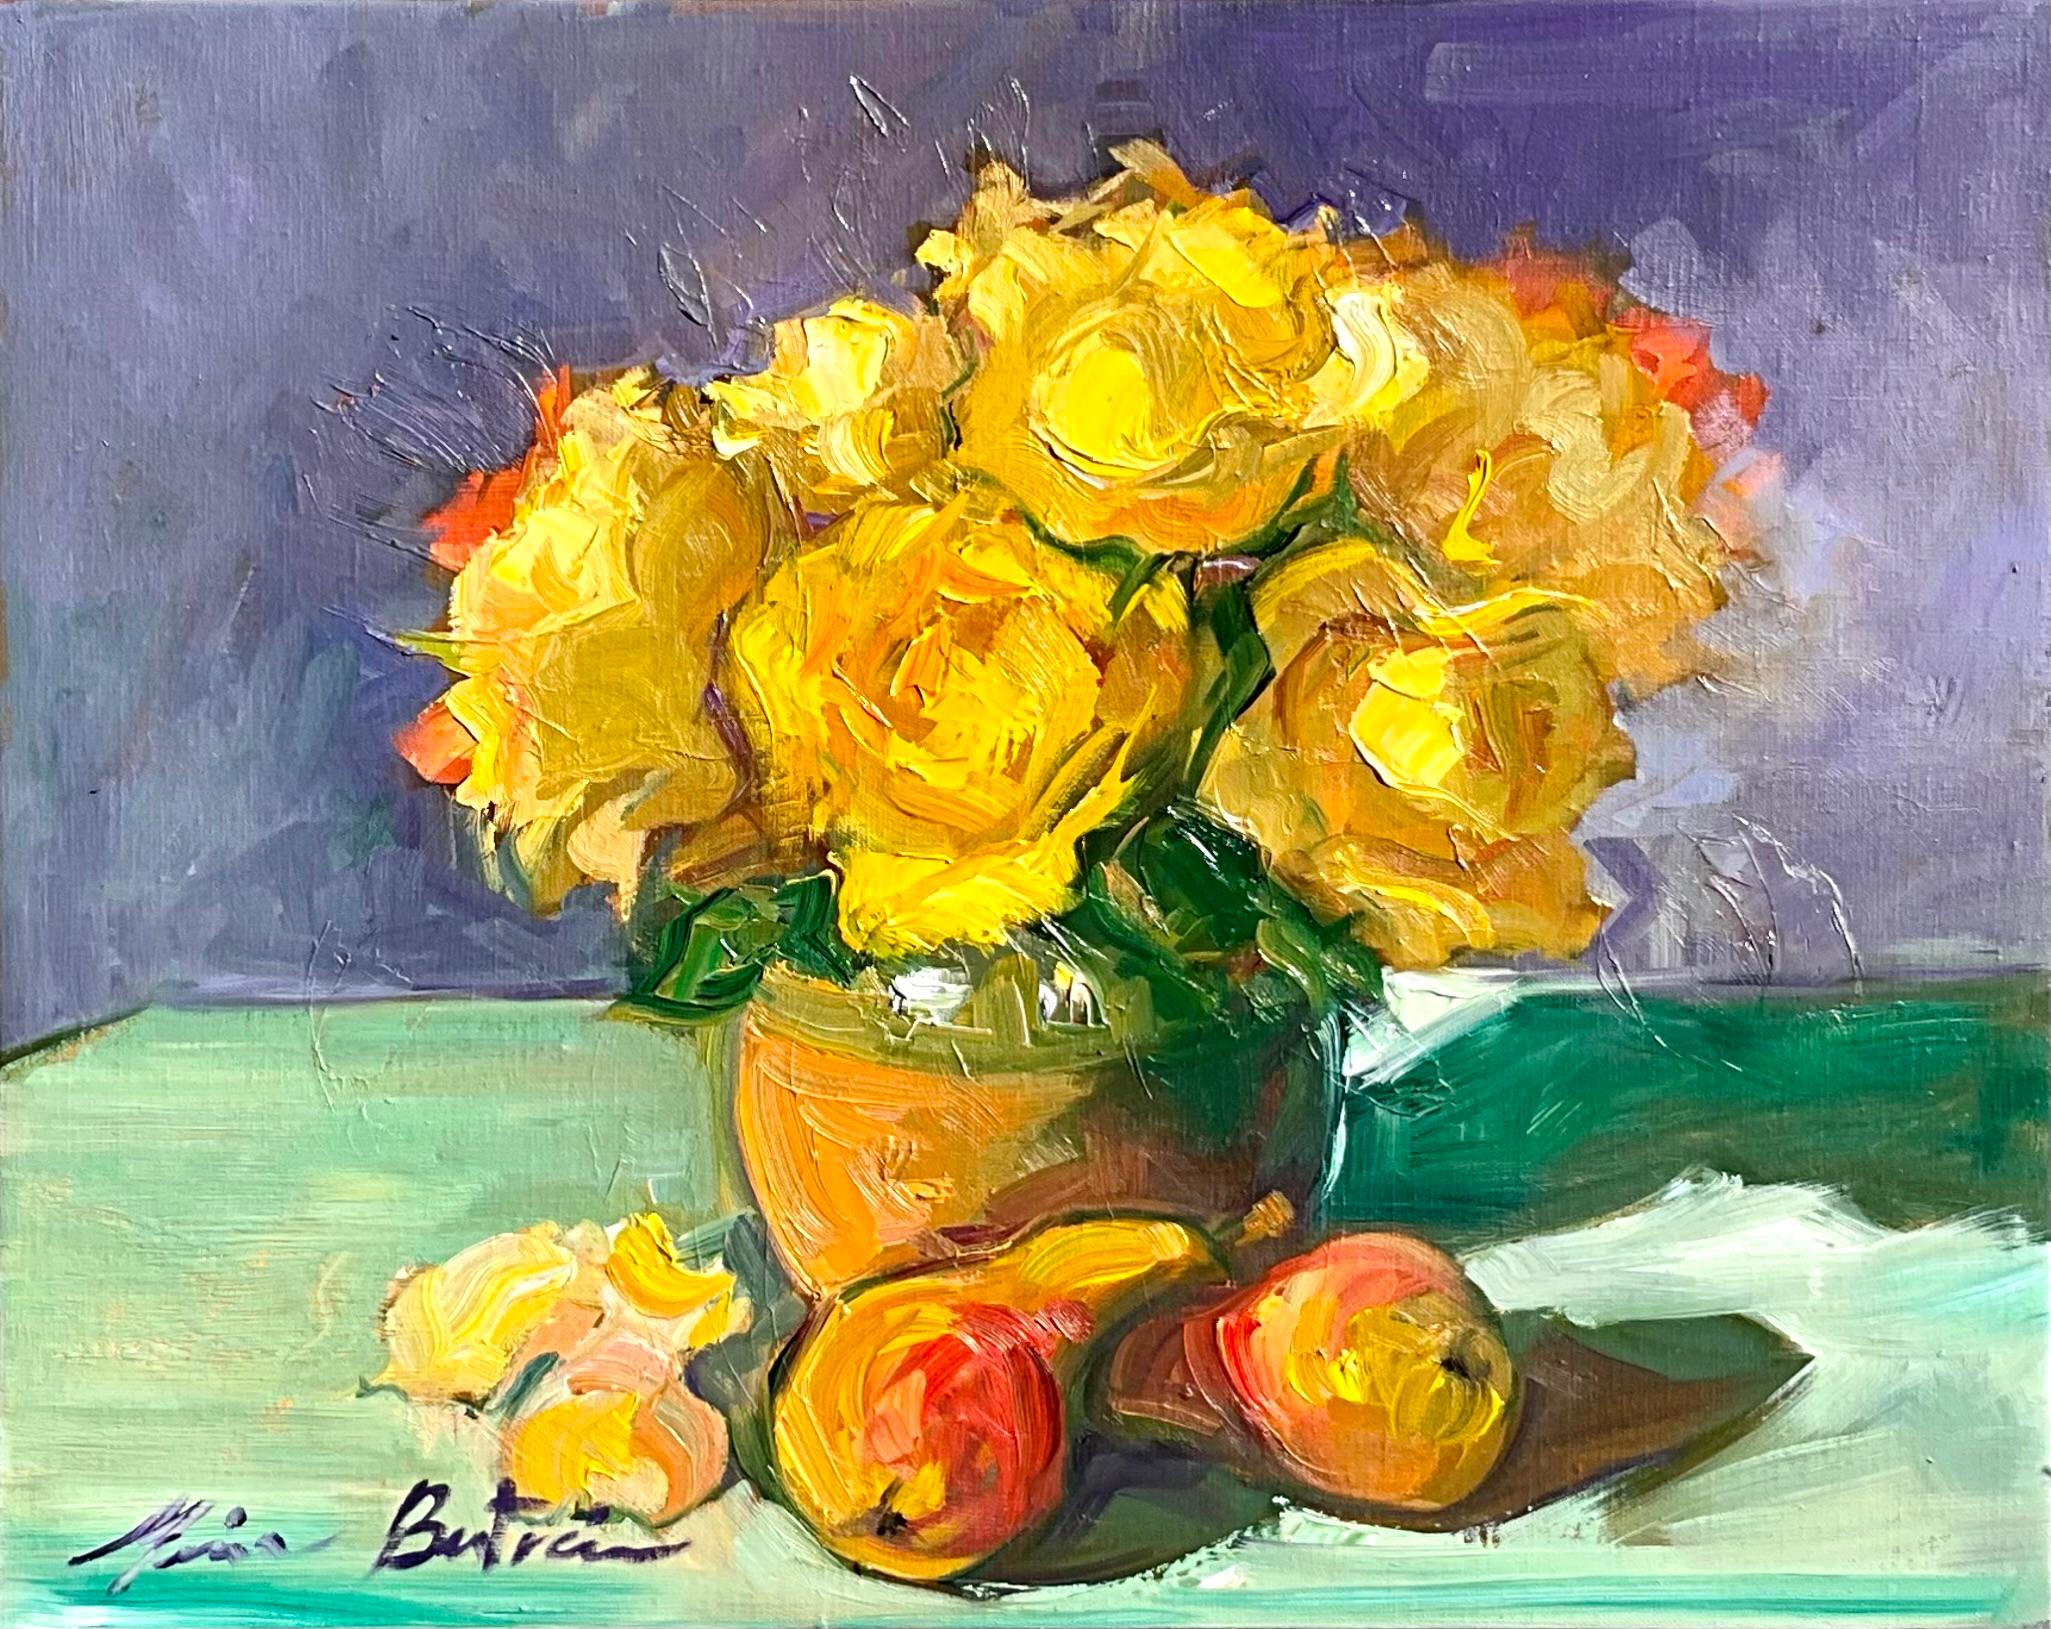 Still-Life Painting Maria Bertrán - "Yellow Roses" Nature morte impressionniste contemporaine à l'huile